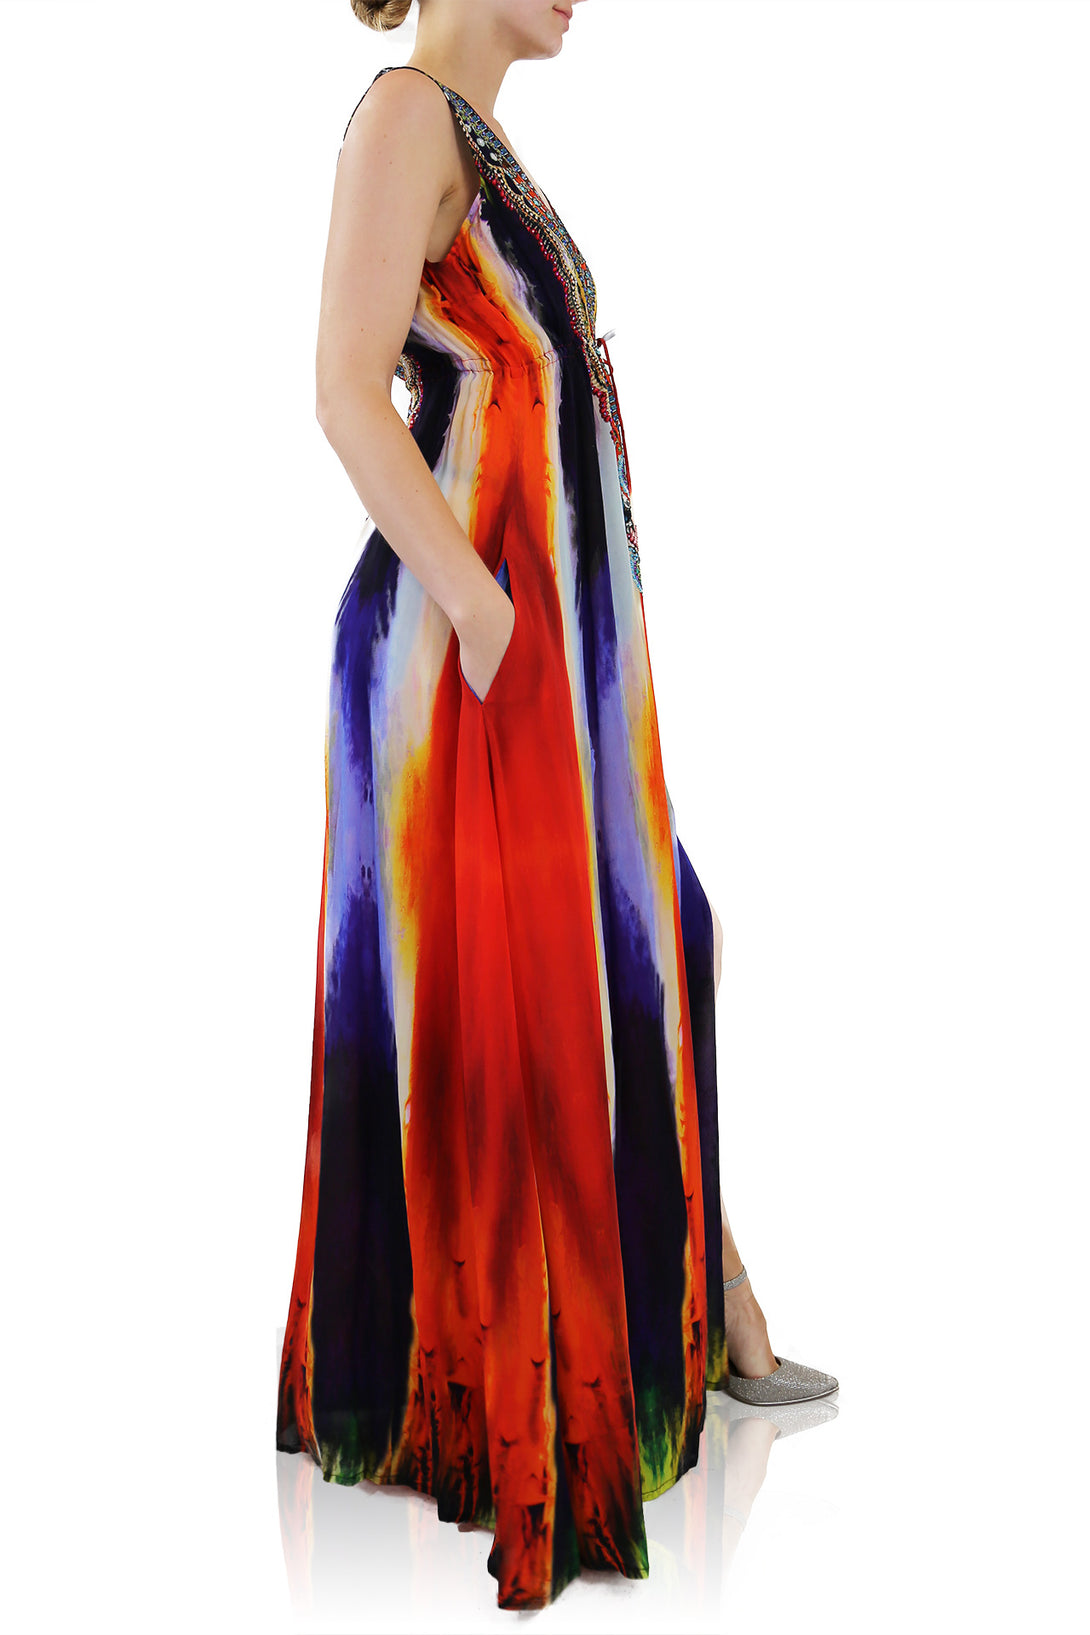   red casual dress, summer maxi dresses for women, plunging v neck formal dress, Shahida Parides,